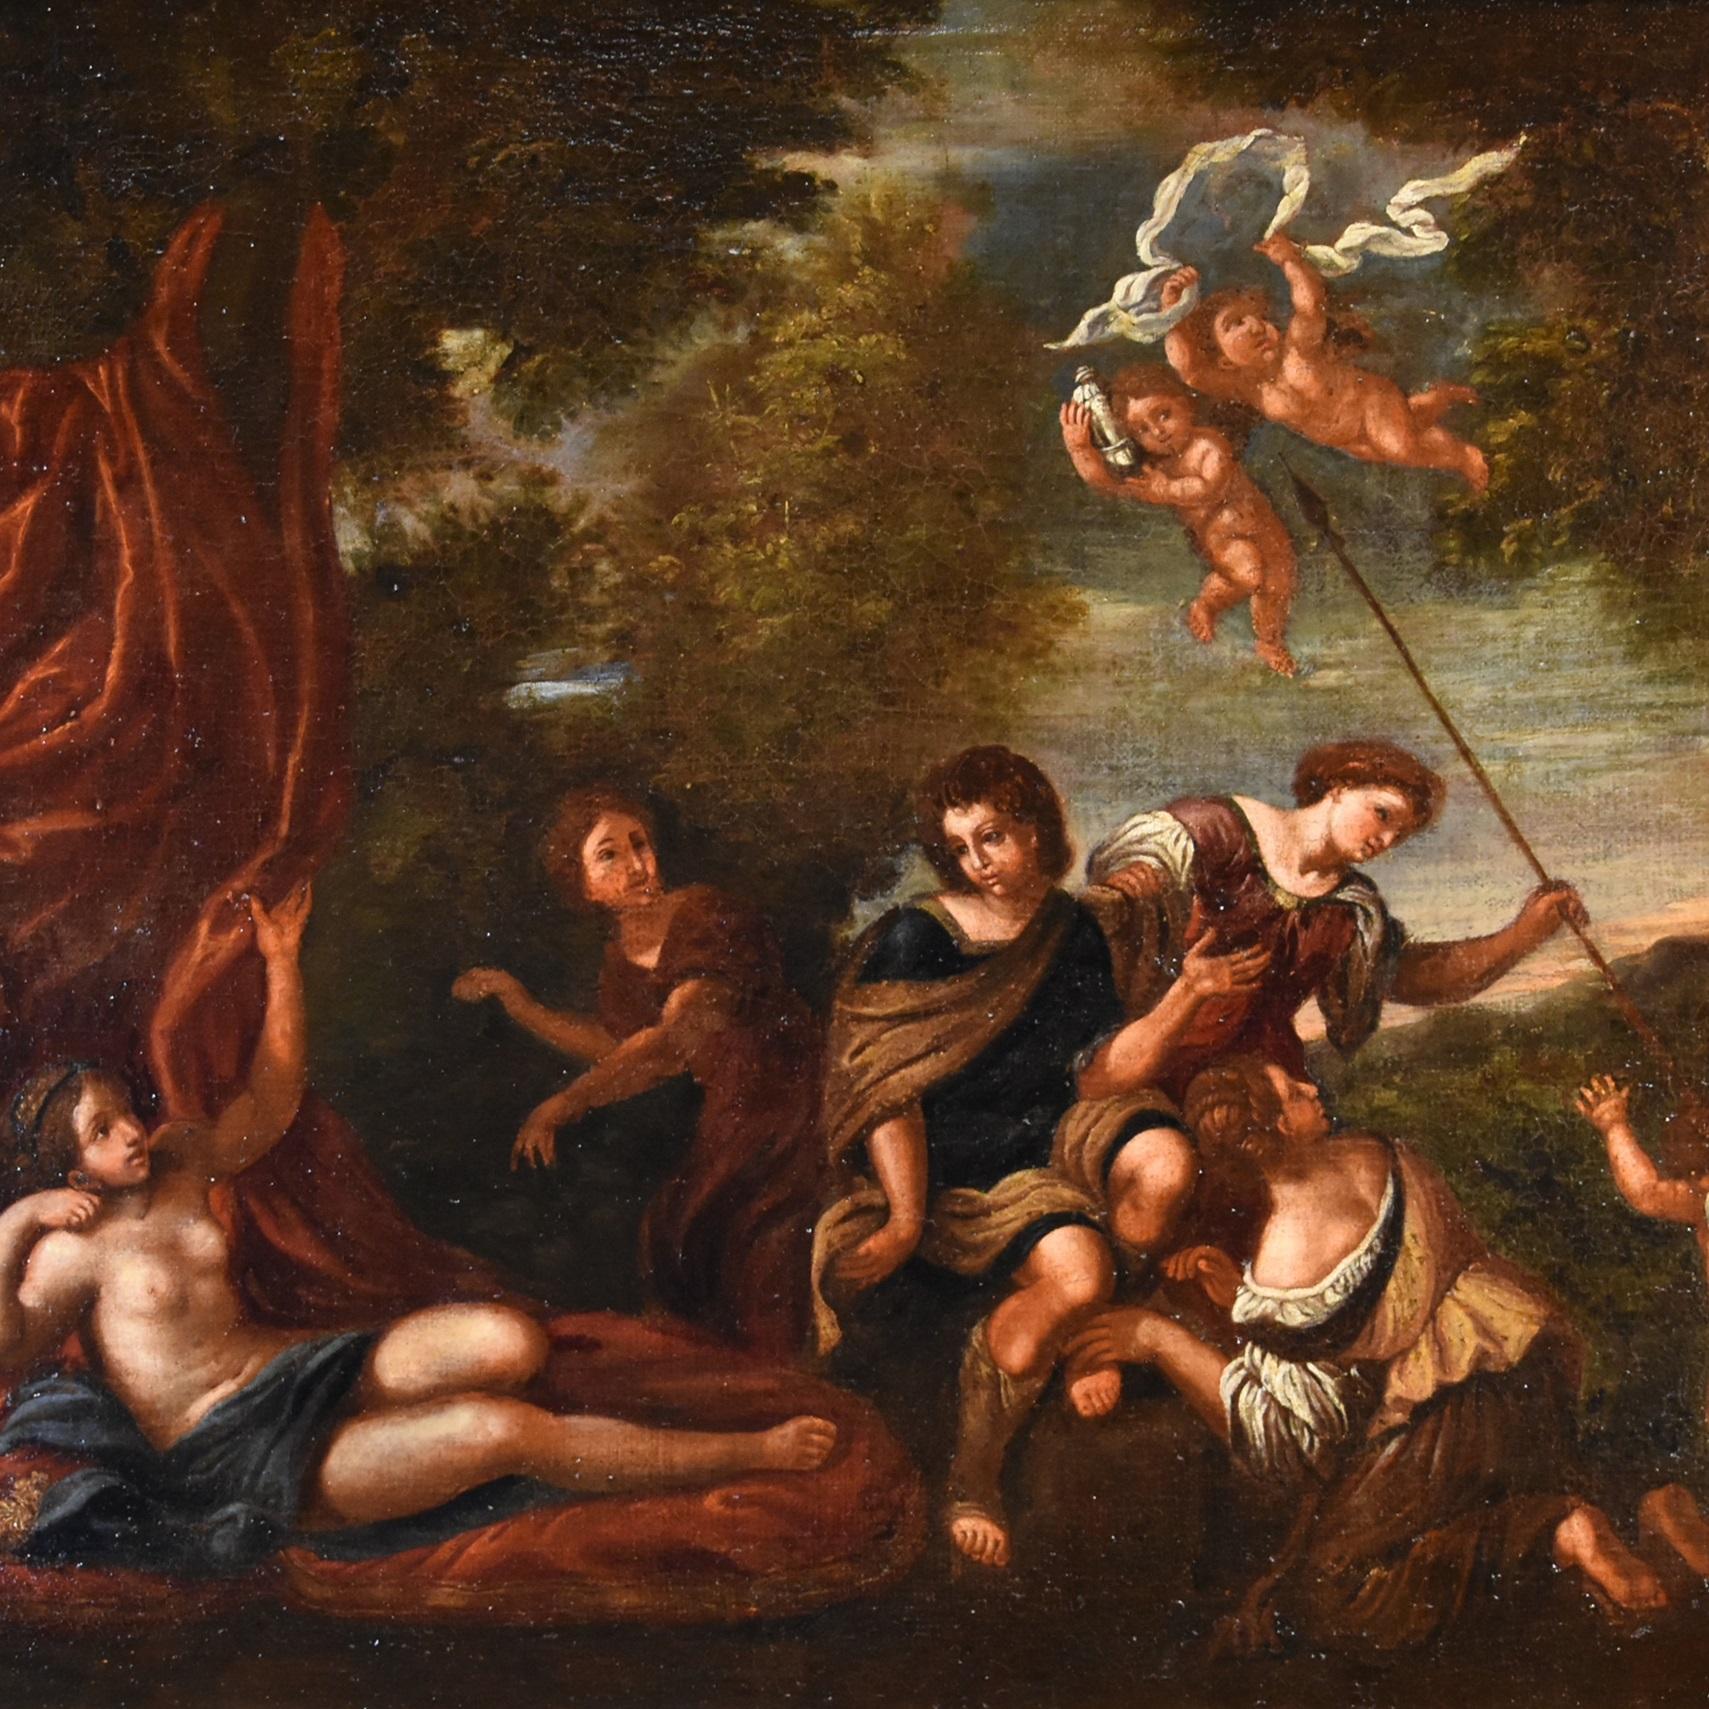 Diana Albani Mythological Paint Oil on canvas 17th Century Old master Italy Art 5